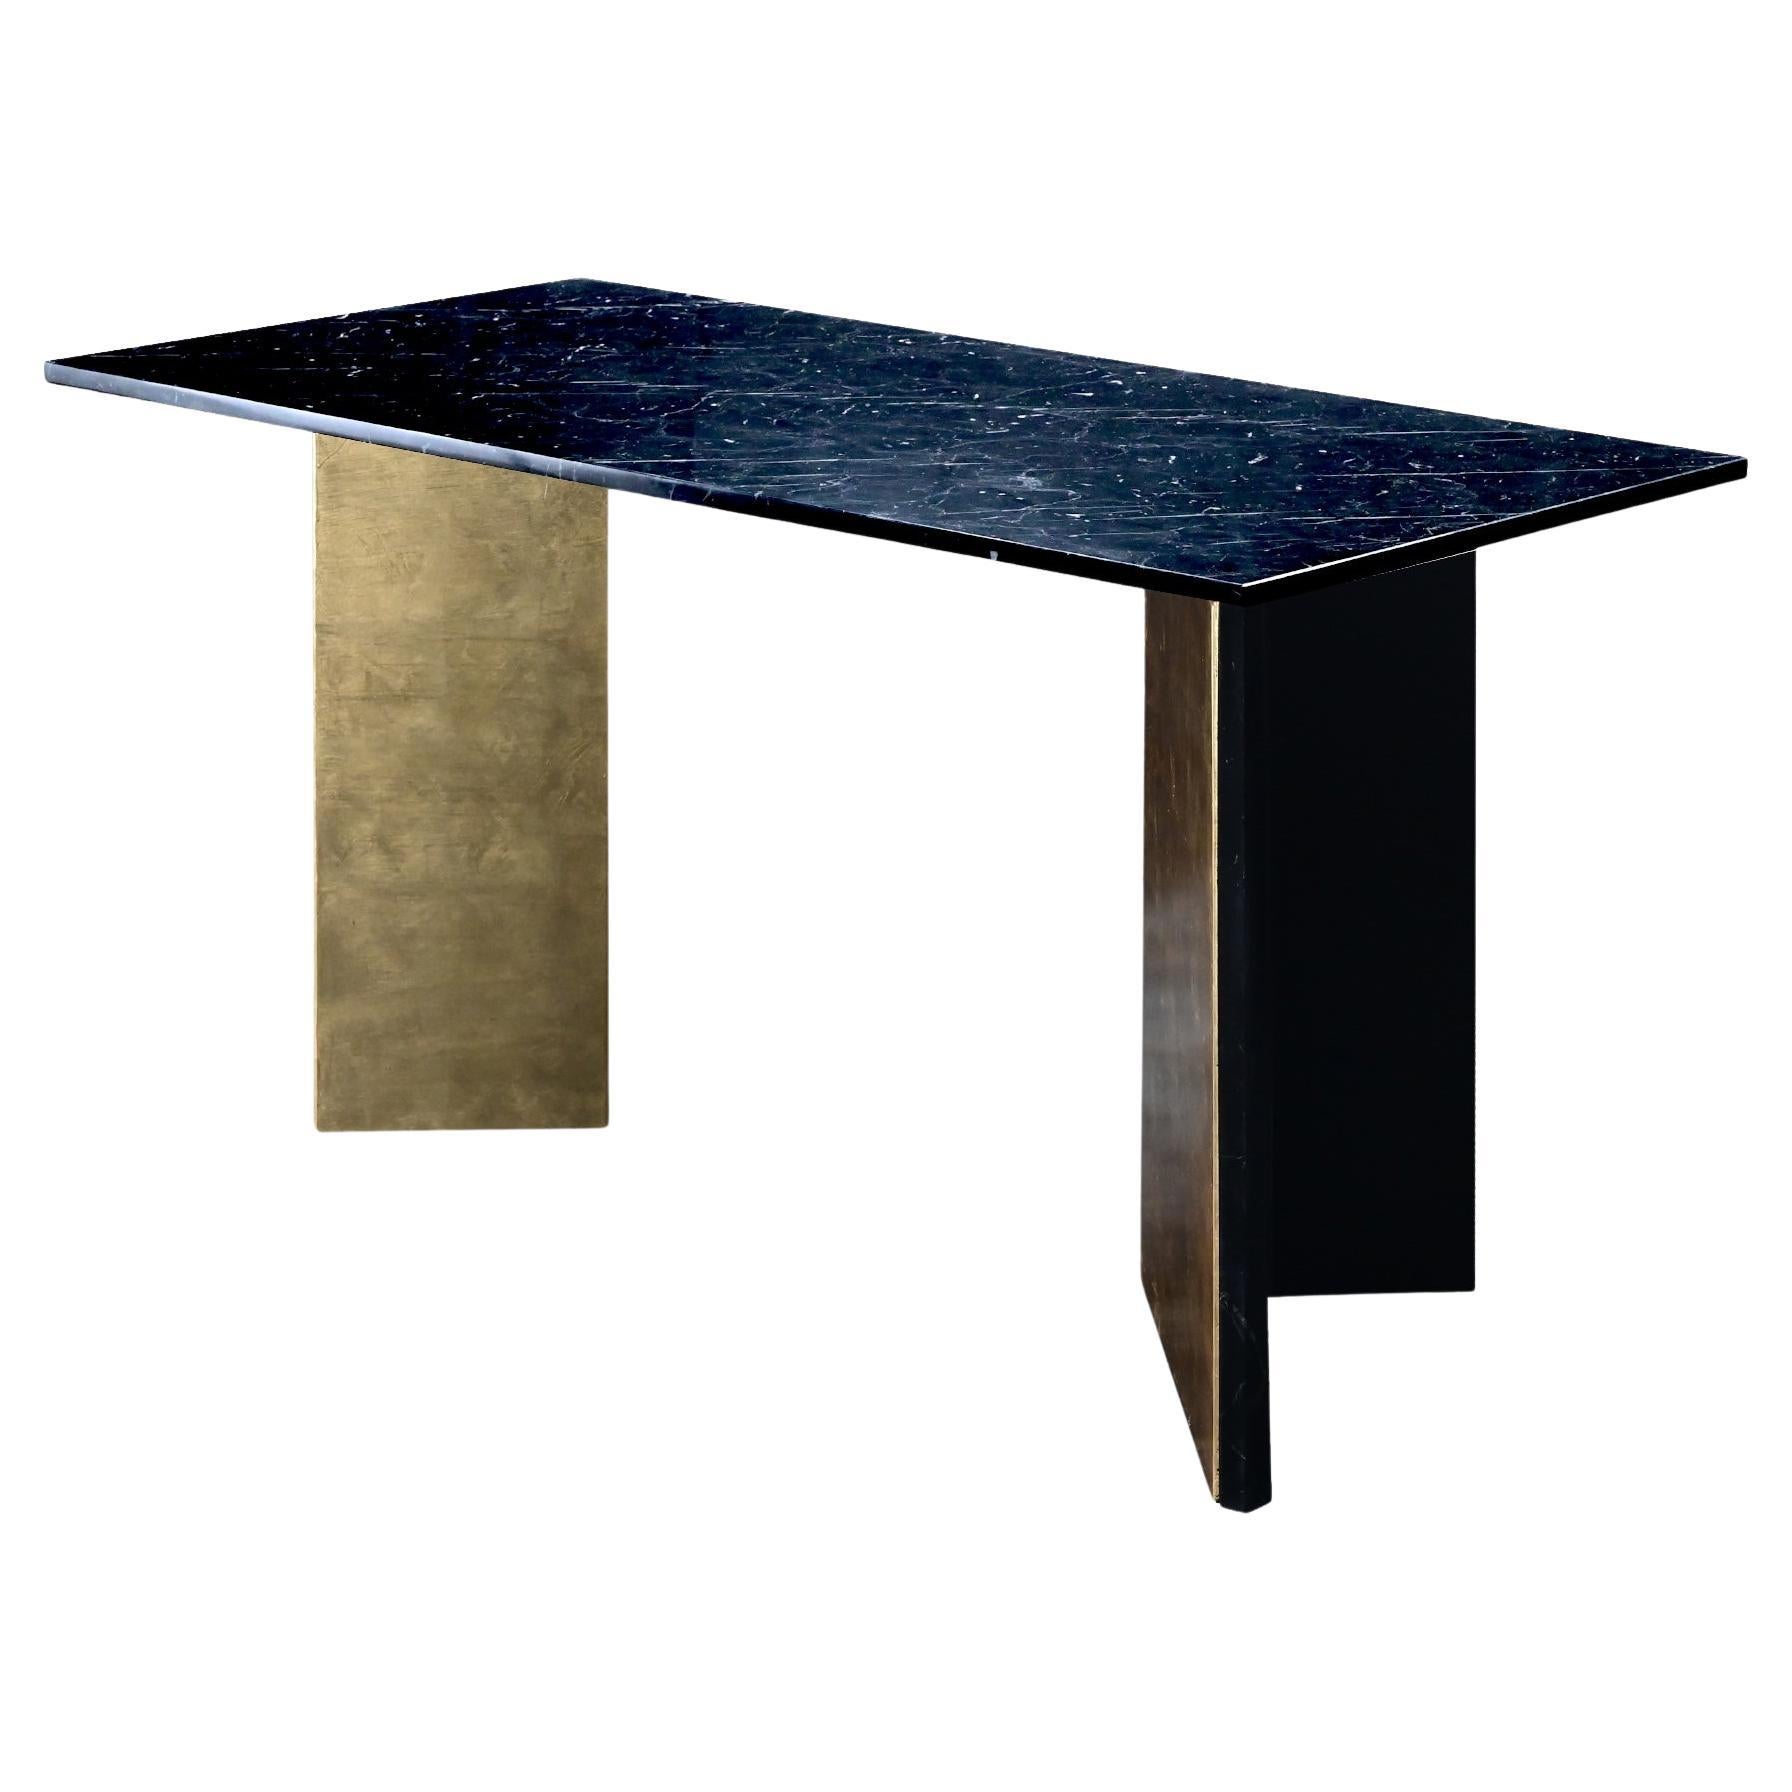 Scorcio - Table de salle  manger Nero Marquinia et feuille d'or par DFdesignlab fabrique en Italie